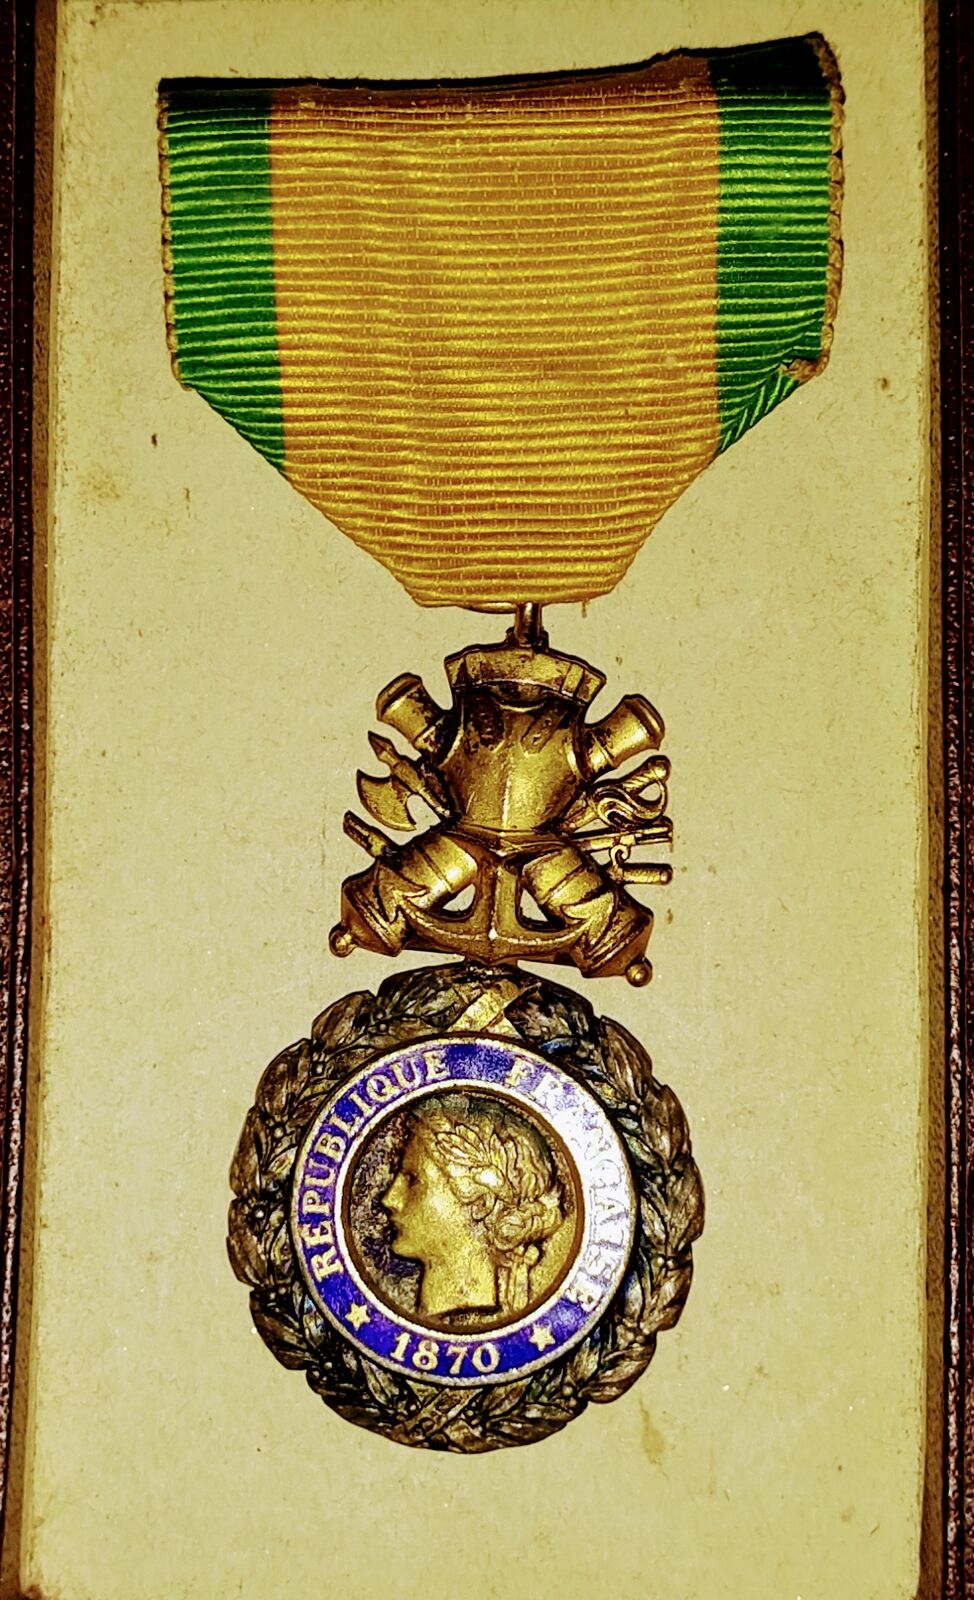 France war medal 1870 in orginal box.